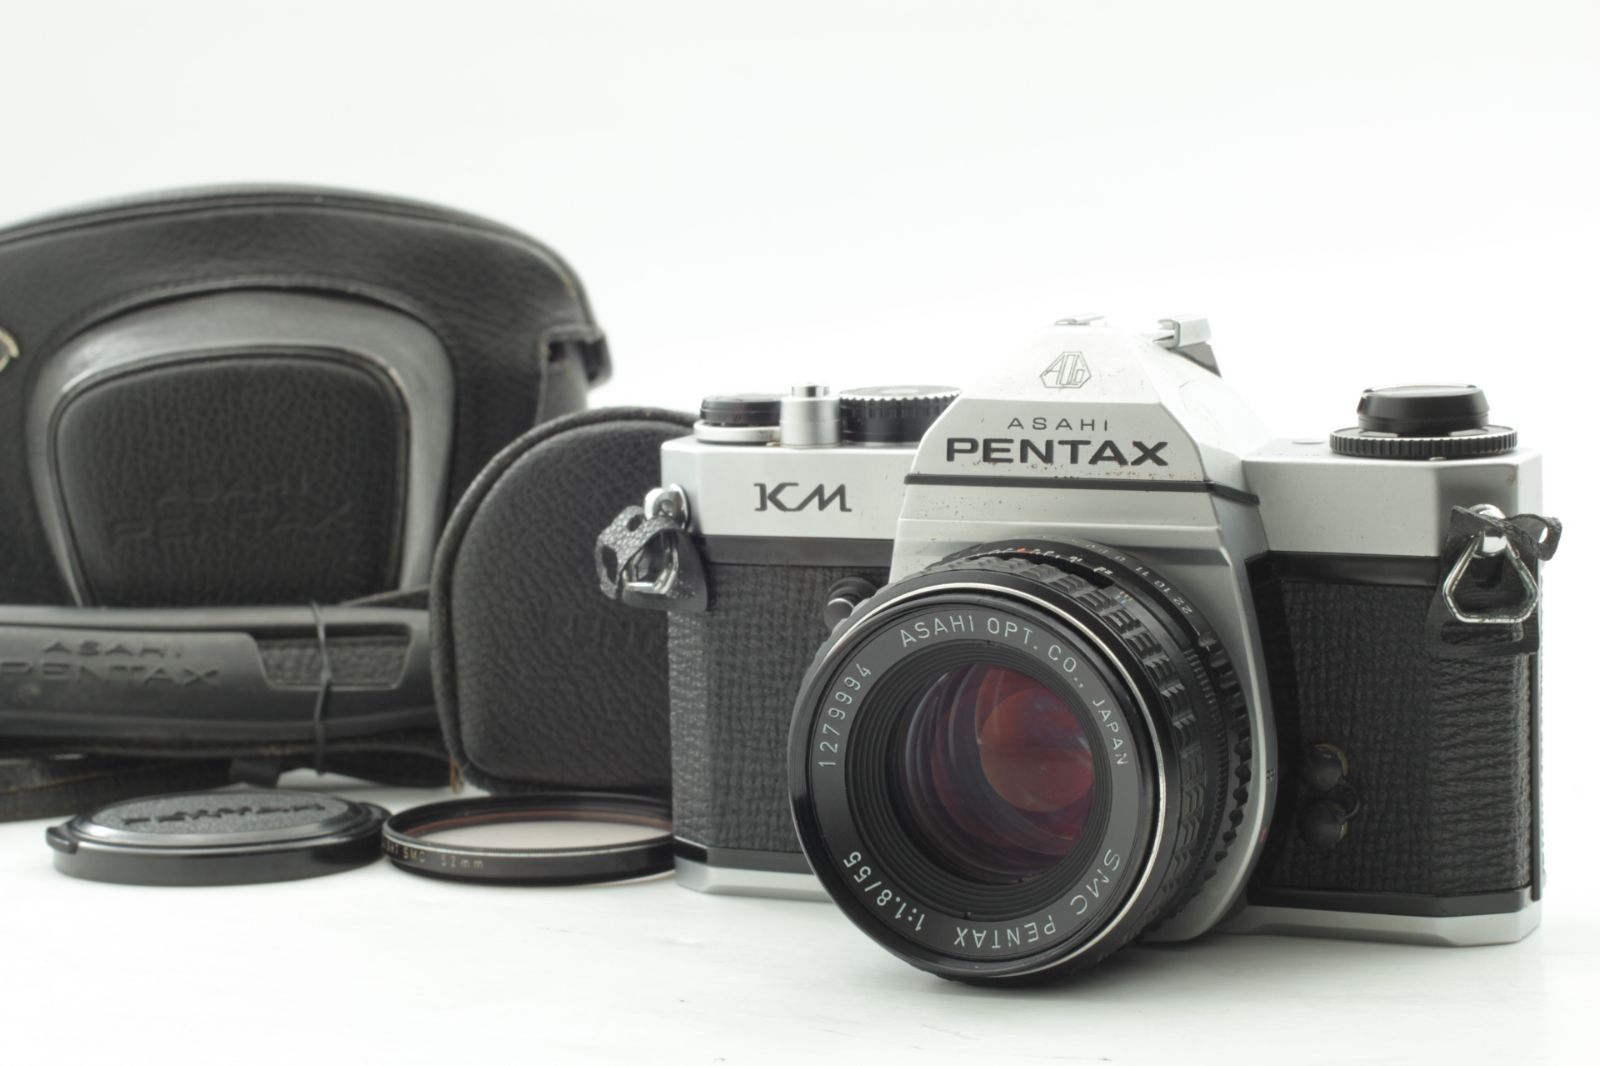 並品 ASAHI PENTAX KM SLR Camera 55mm f/1.8